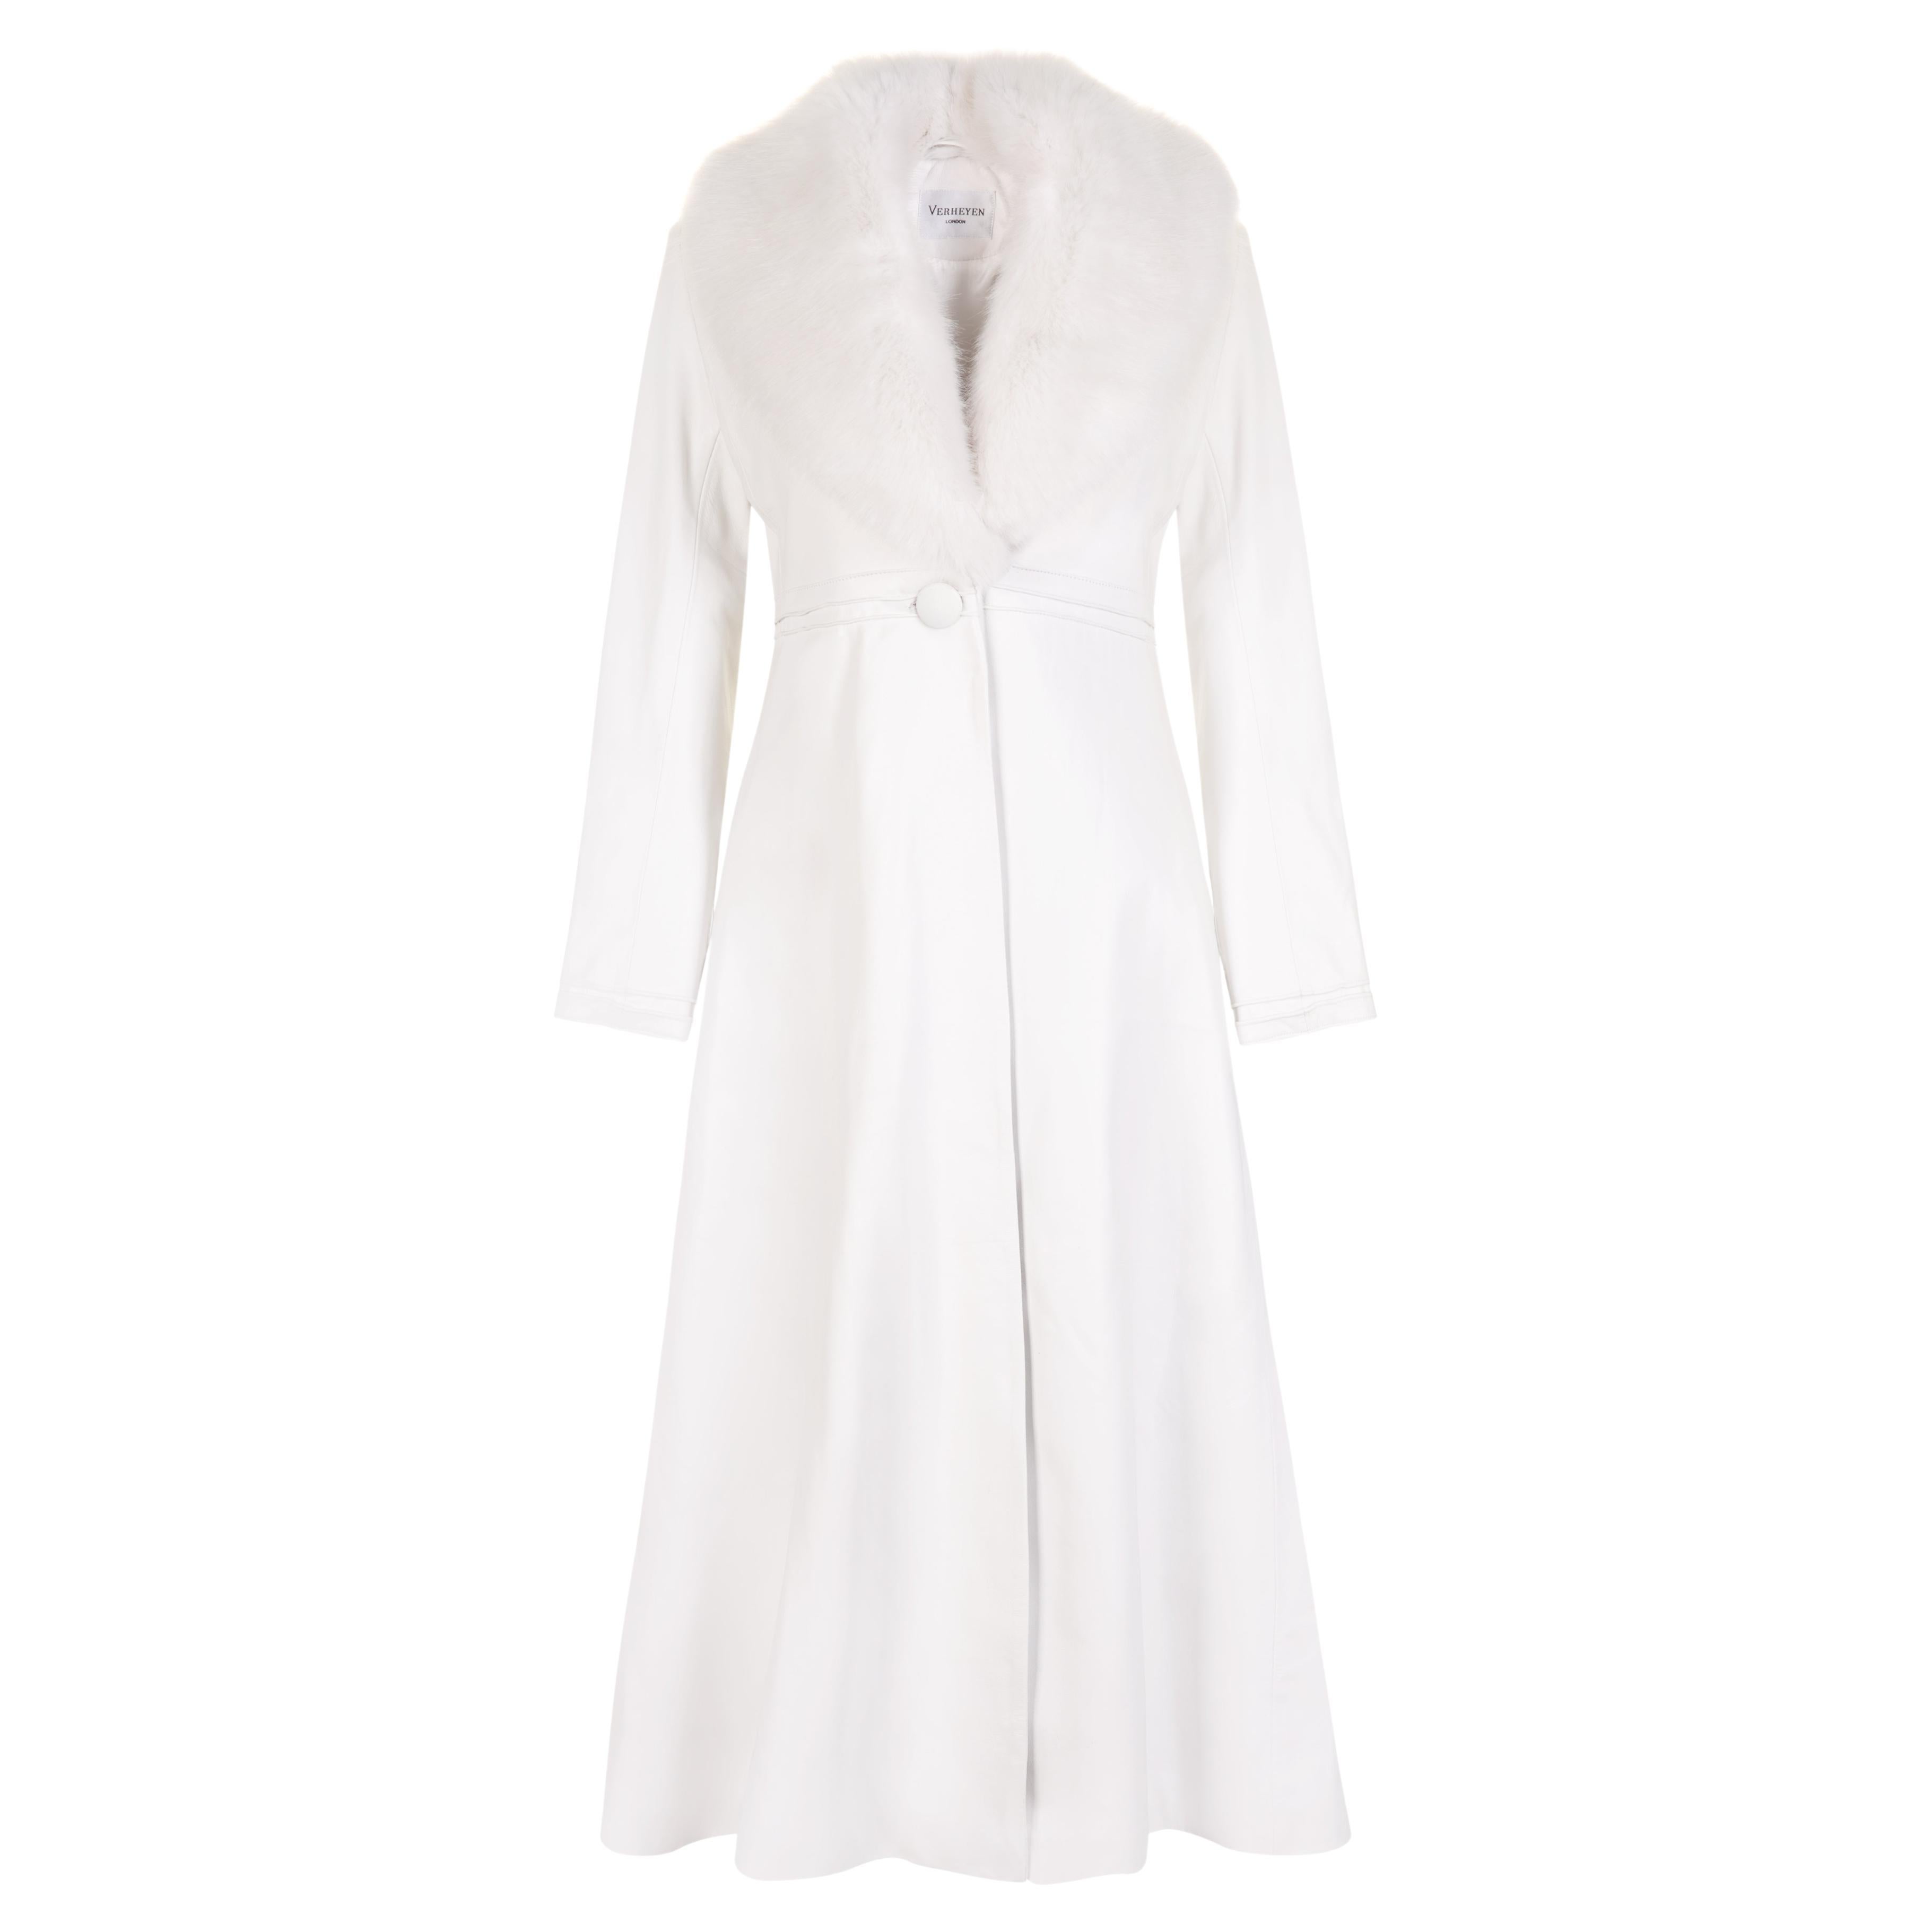 Verheyen London Edward Leather Coat in White with Faux Fur - Size uk 12 